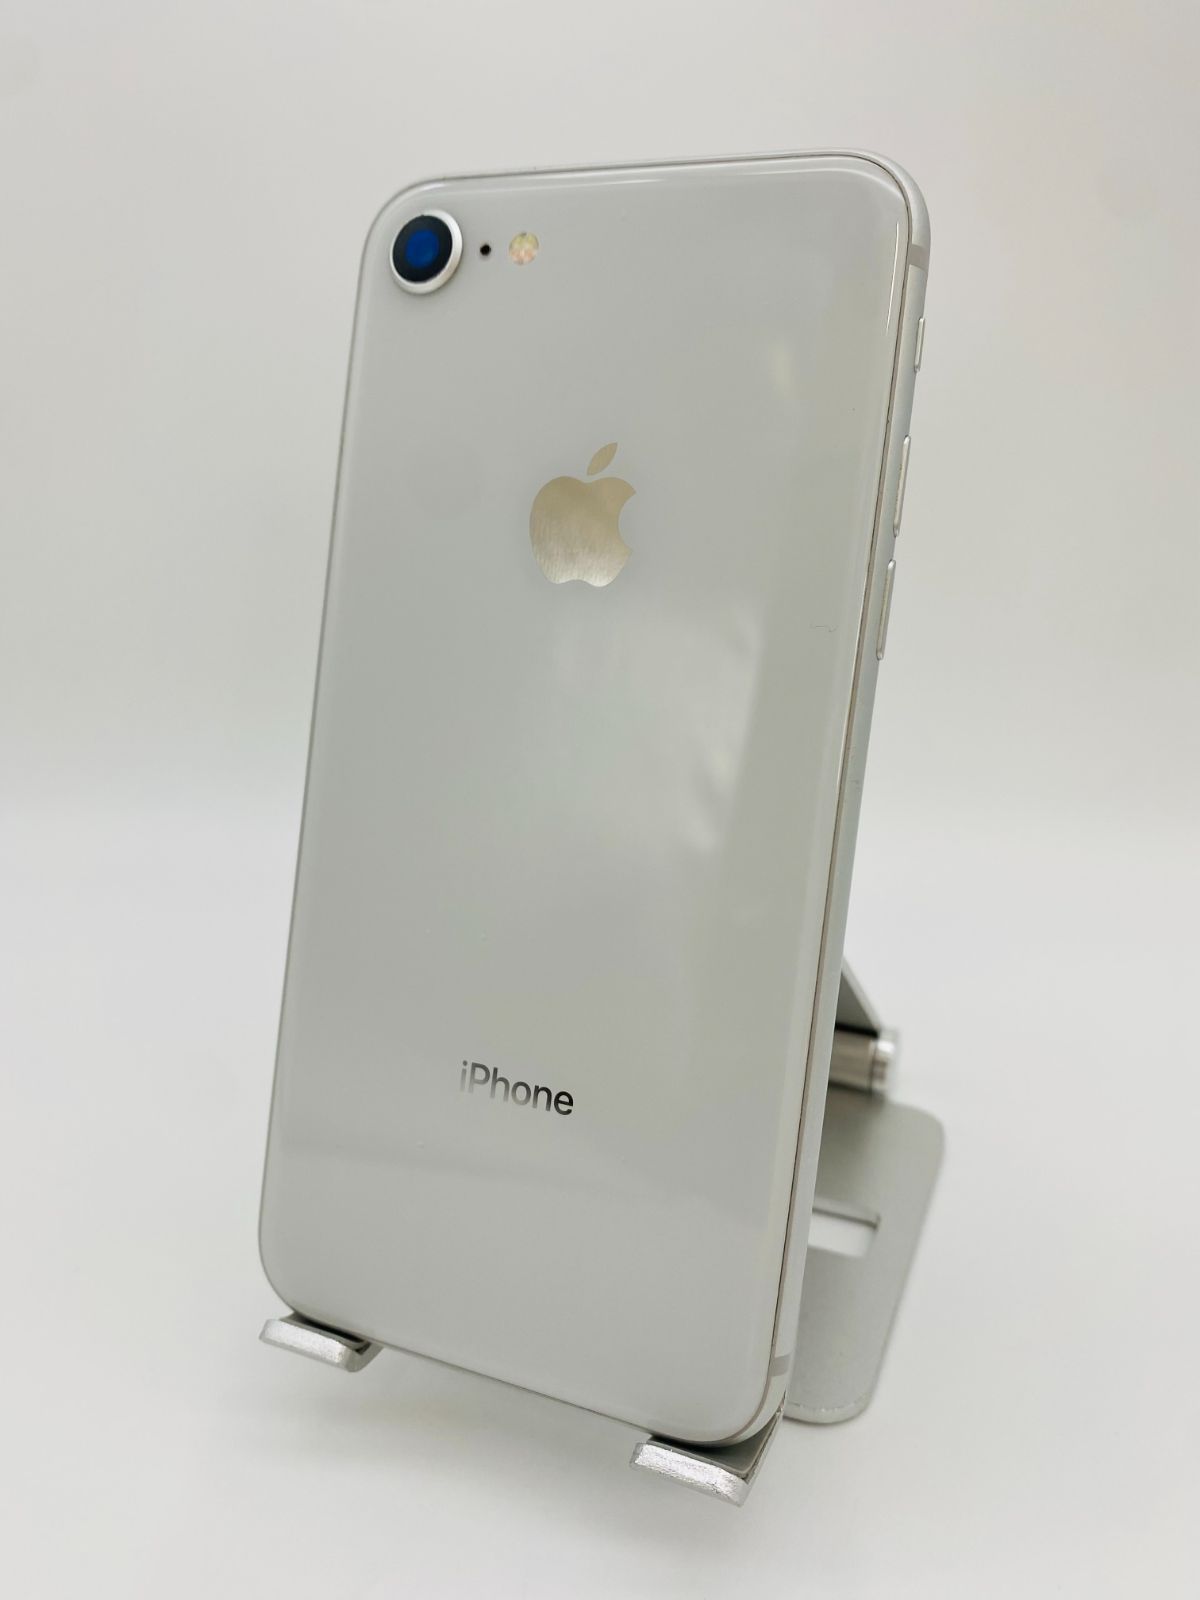 iPhone8 64GB シルバー/シムフリー/大容量2300mAh 新品バッテリー100% おまけ多数 8-102-